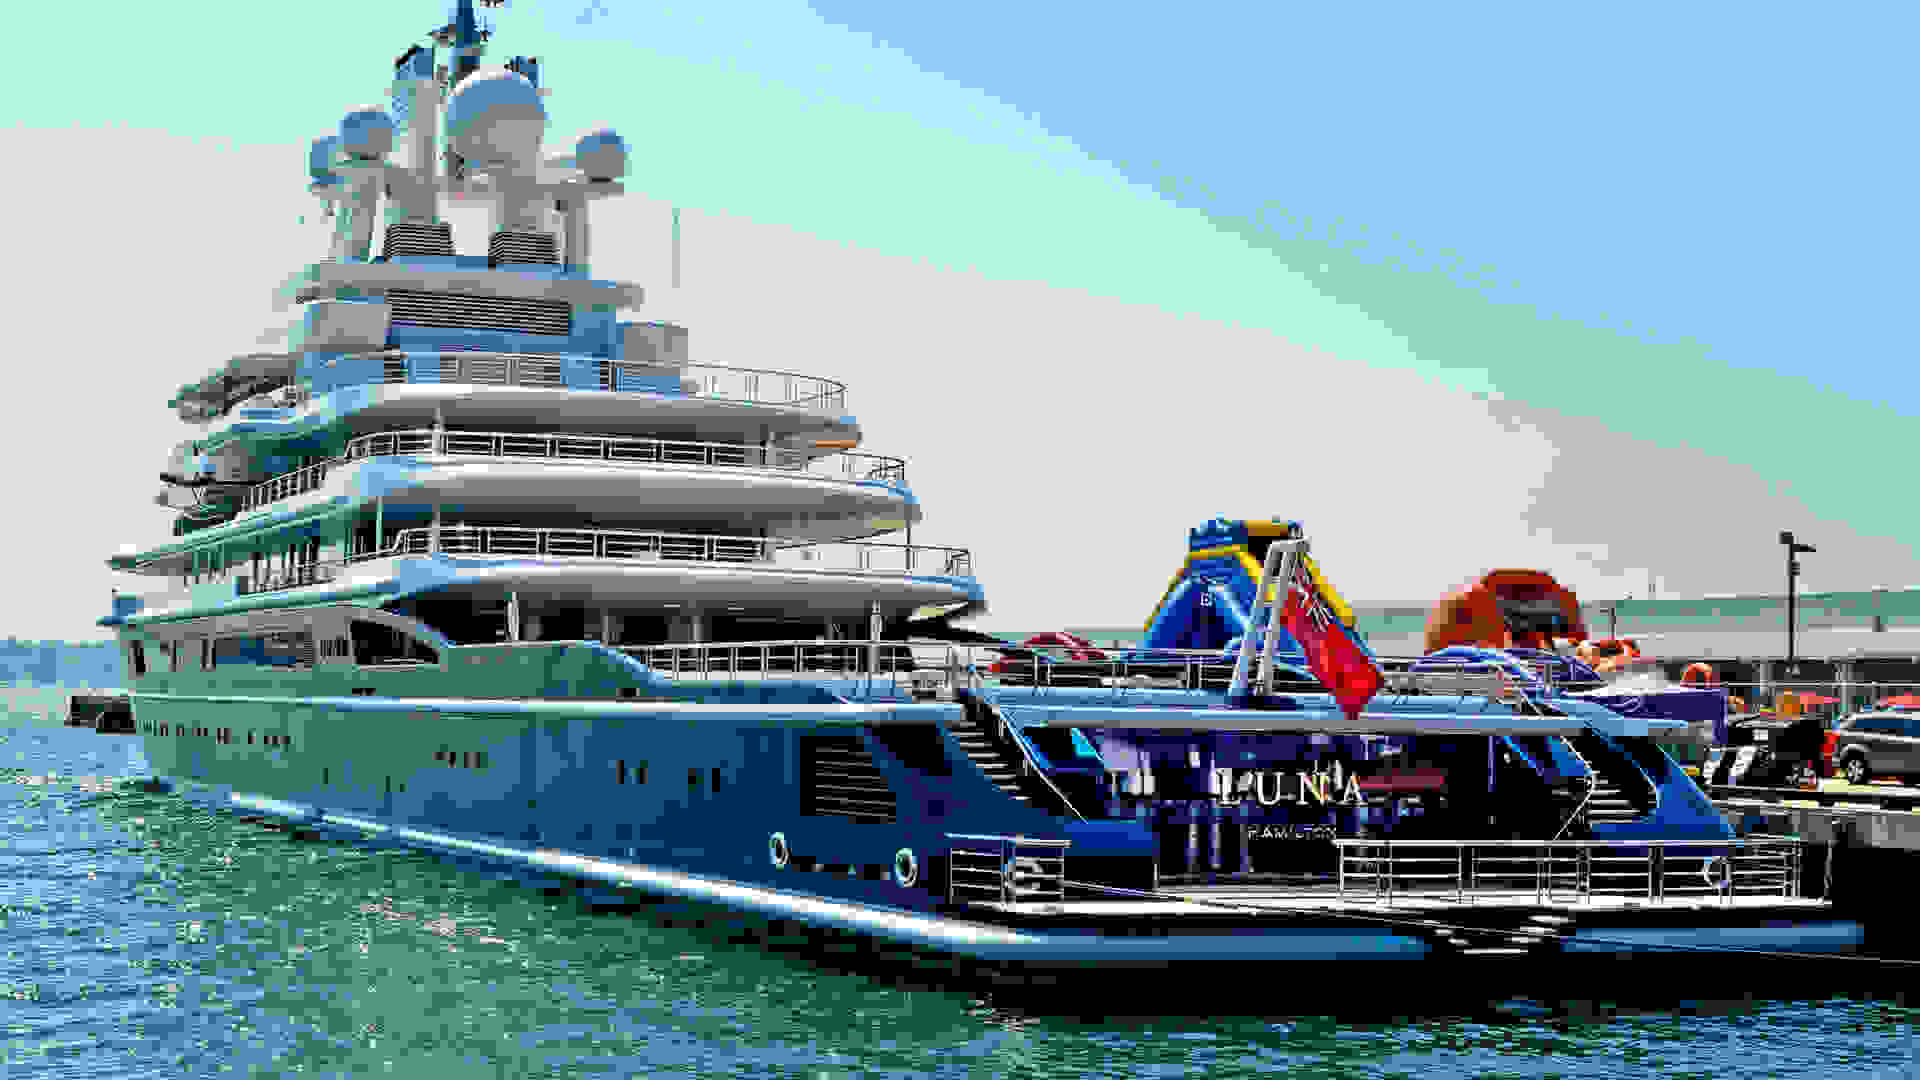 Roman Abramovich’s motor yacht “Luna” docked in San Diego, January 2013. Photo by Sam Morris via Wikipedia (CC-BY-3.0)